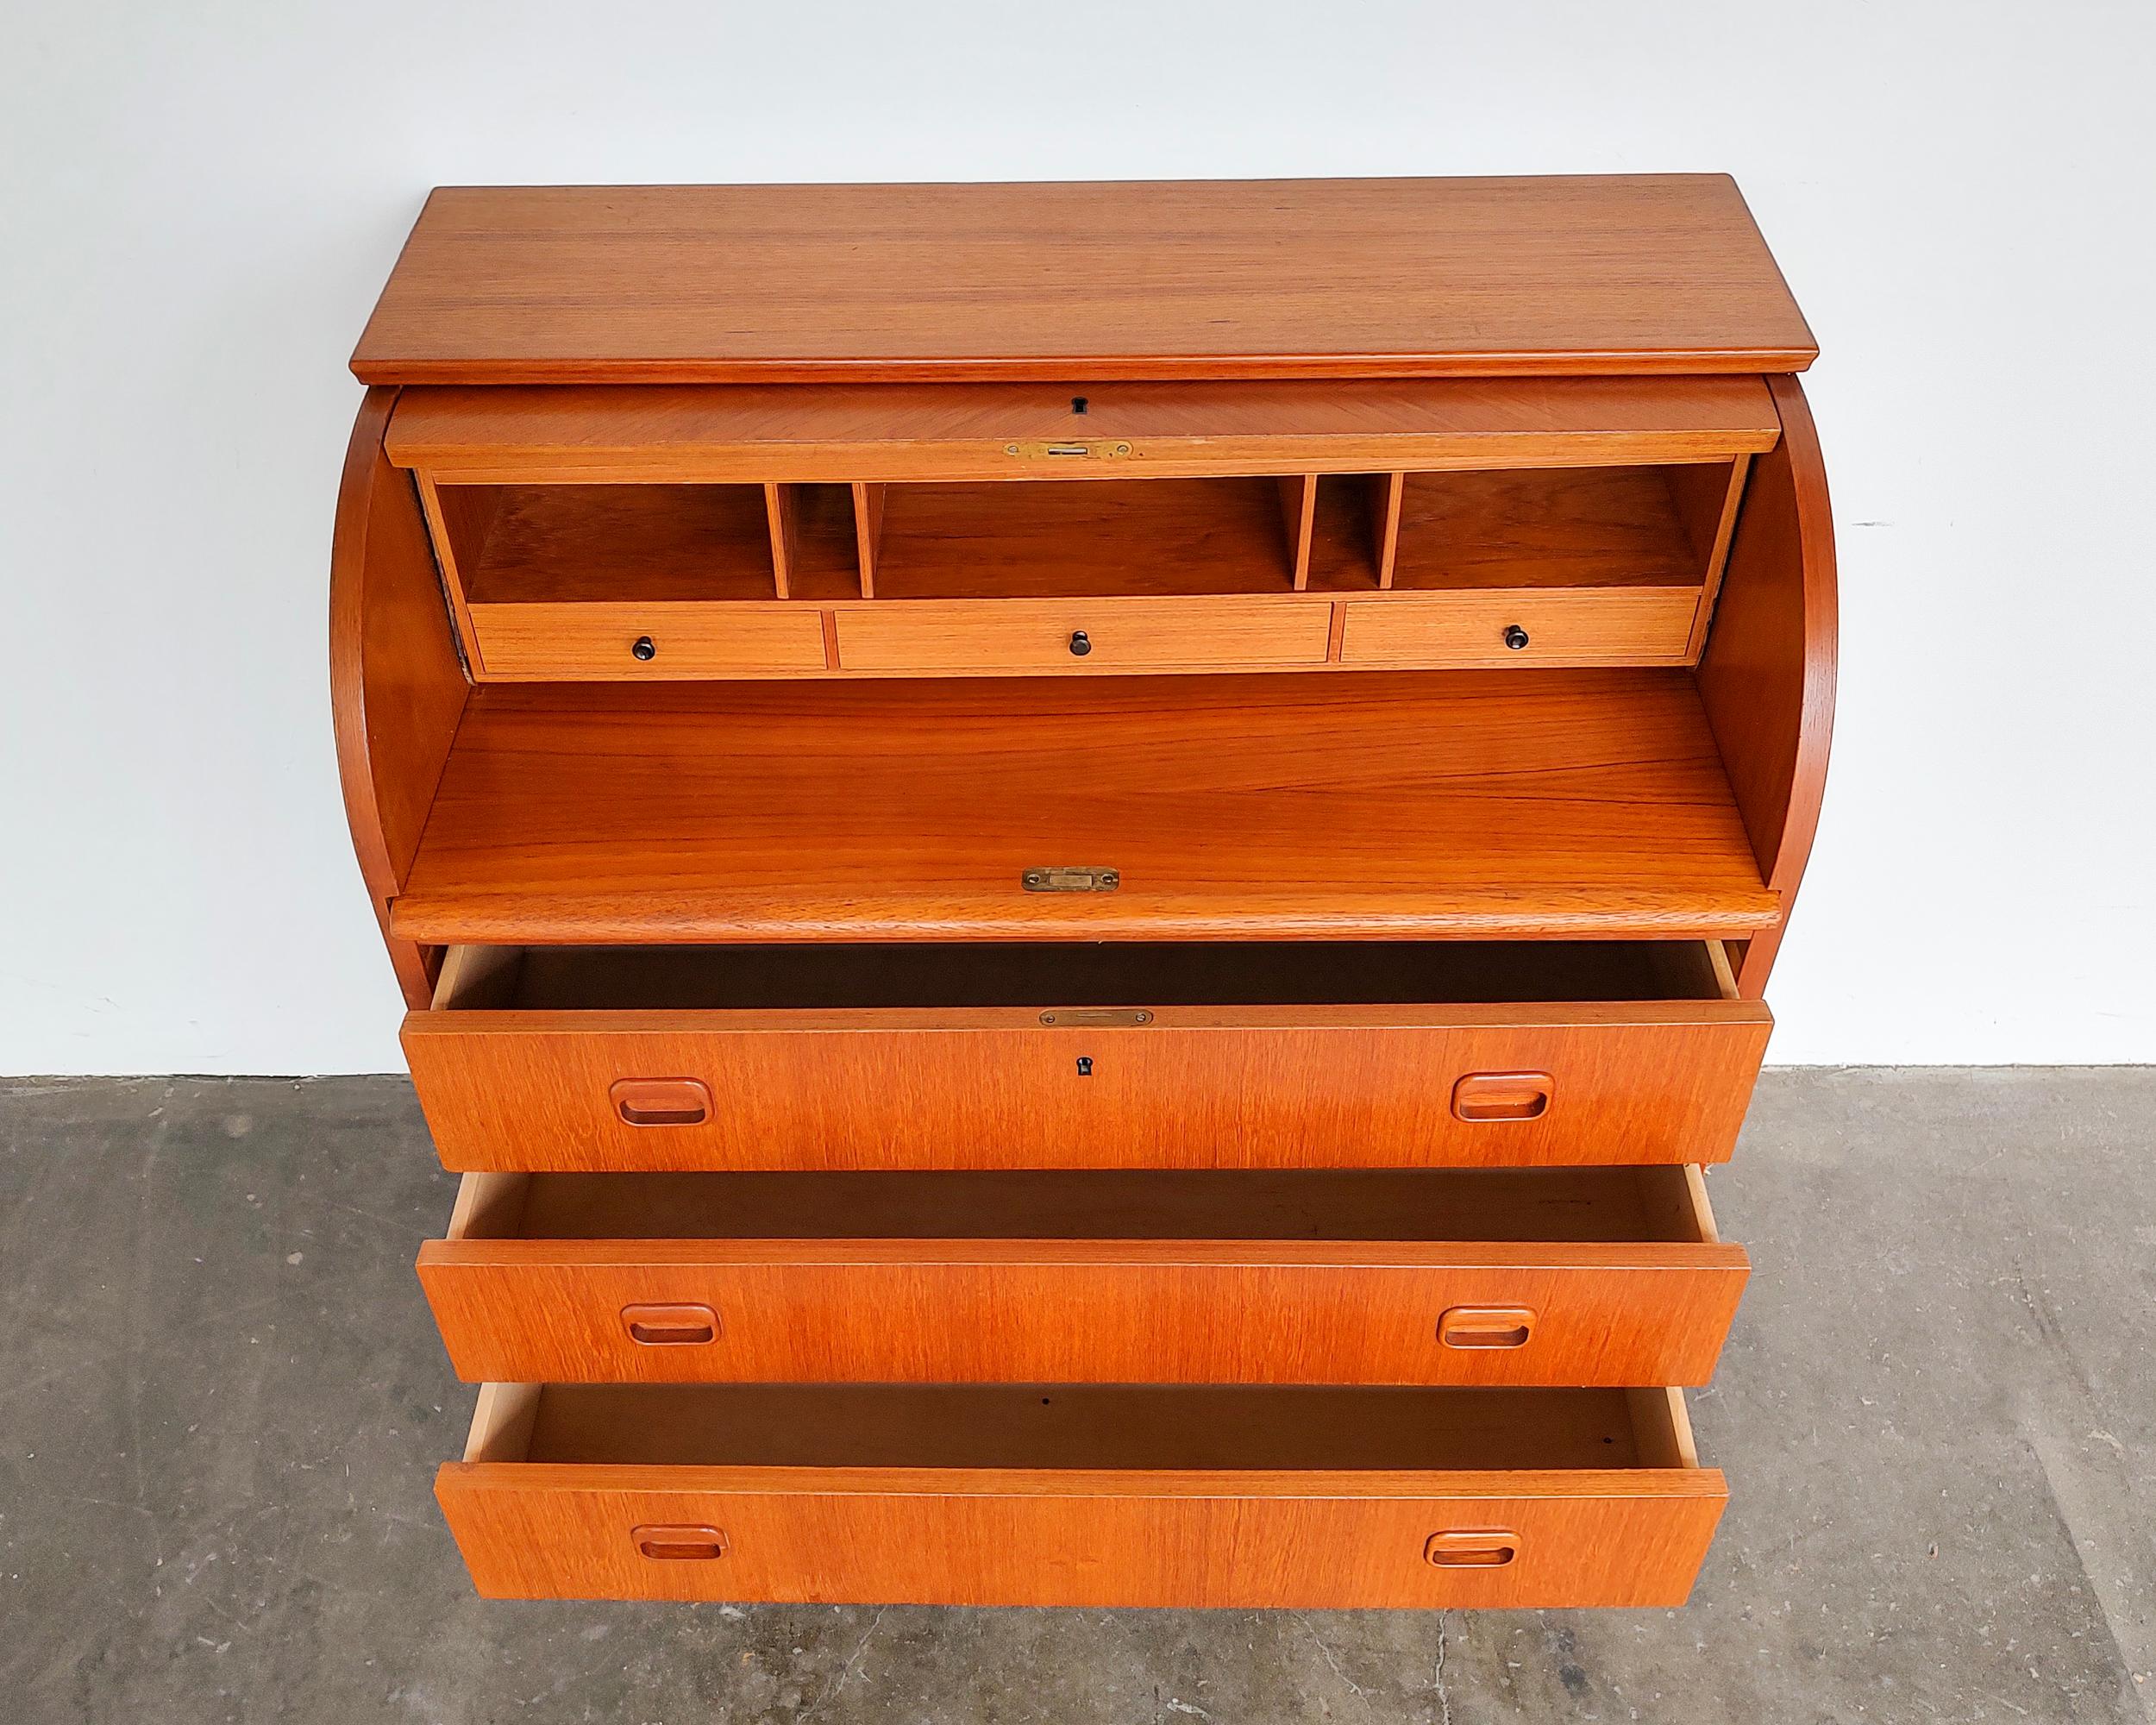 20th Century Mid-Century Modern Teak Wood Roll Top Secretary Desk by Egon Ostergaard 1960s For Sale